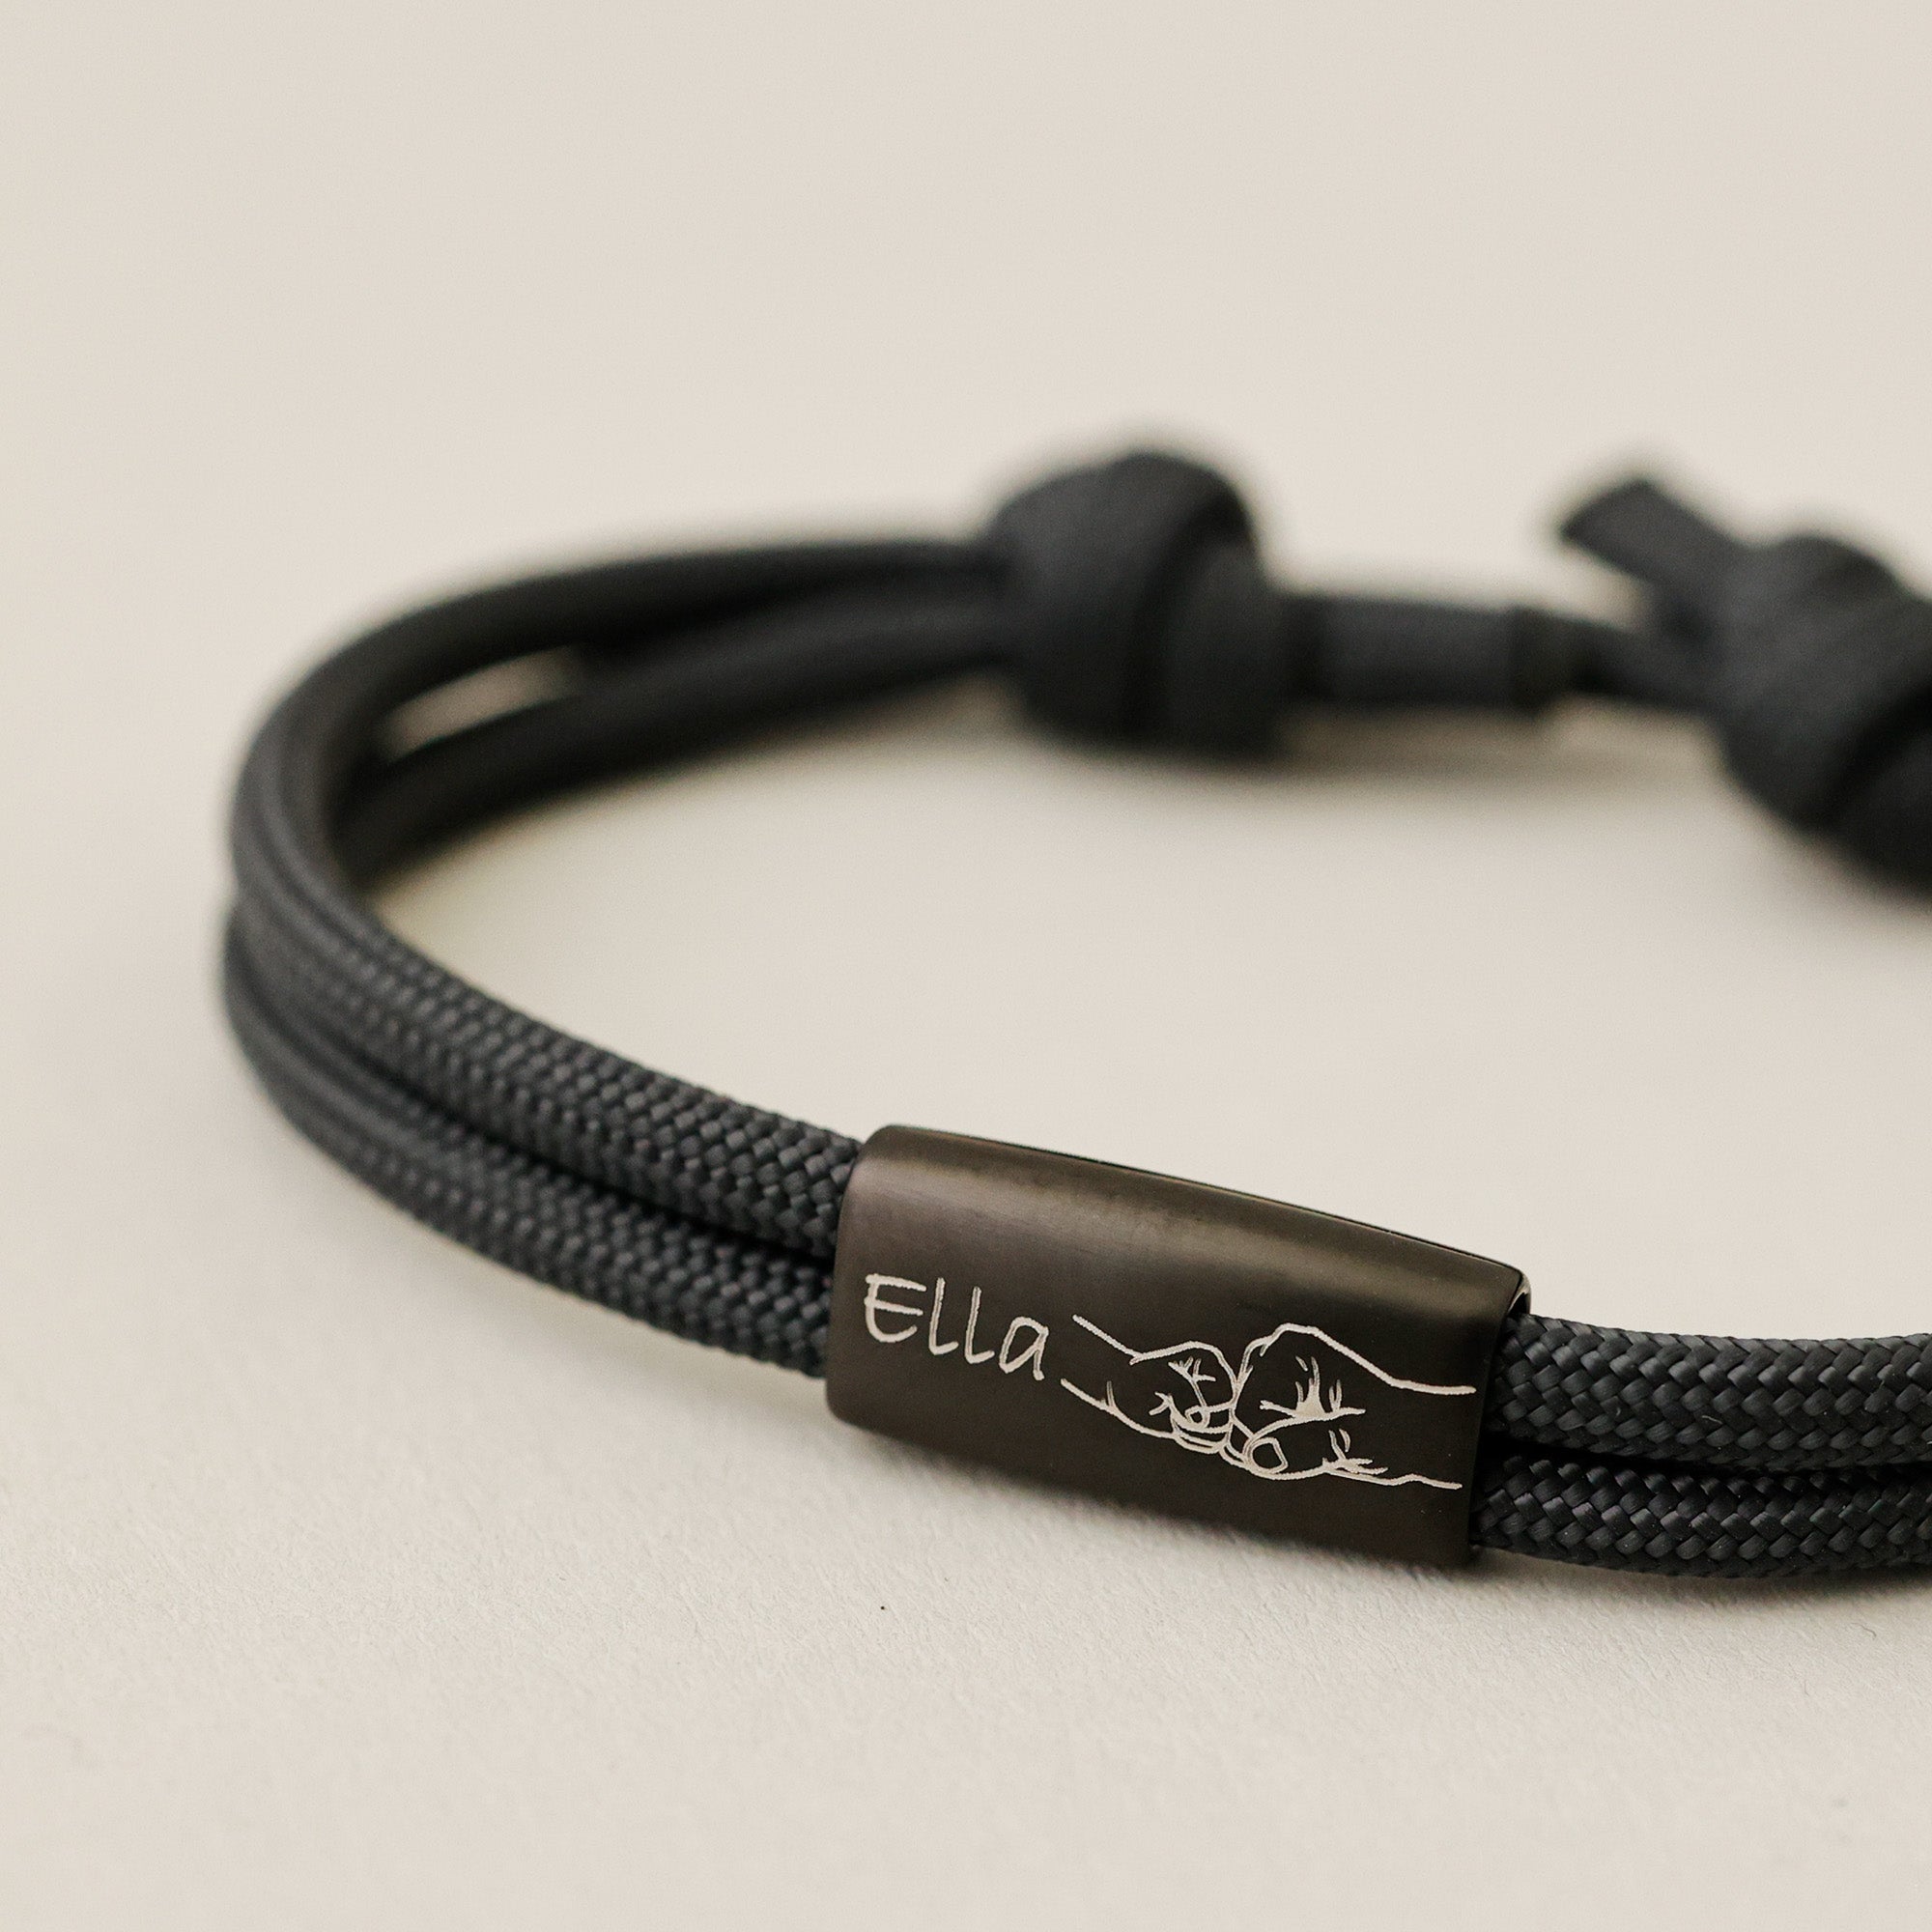 Papa Armband - Herren Armband - Personalisiertes Segeltau Armband - Geschenk für Papa - Wunschgravur - Partnerarmband -Edelstahl A213